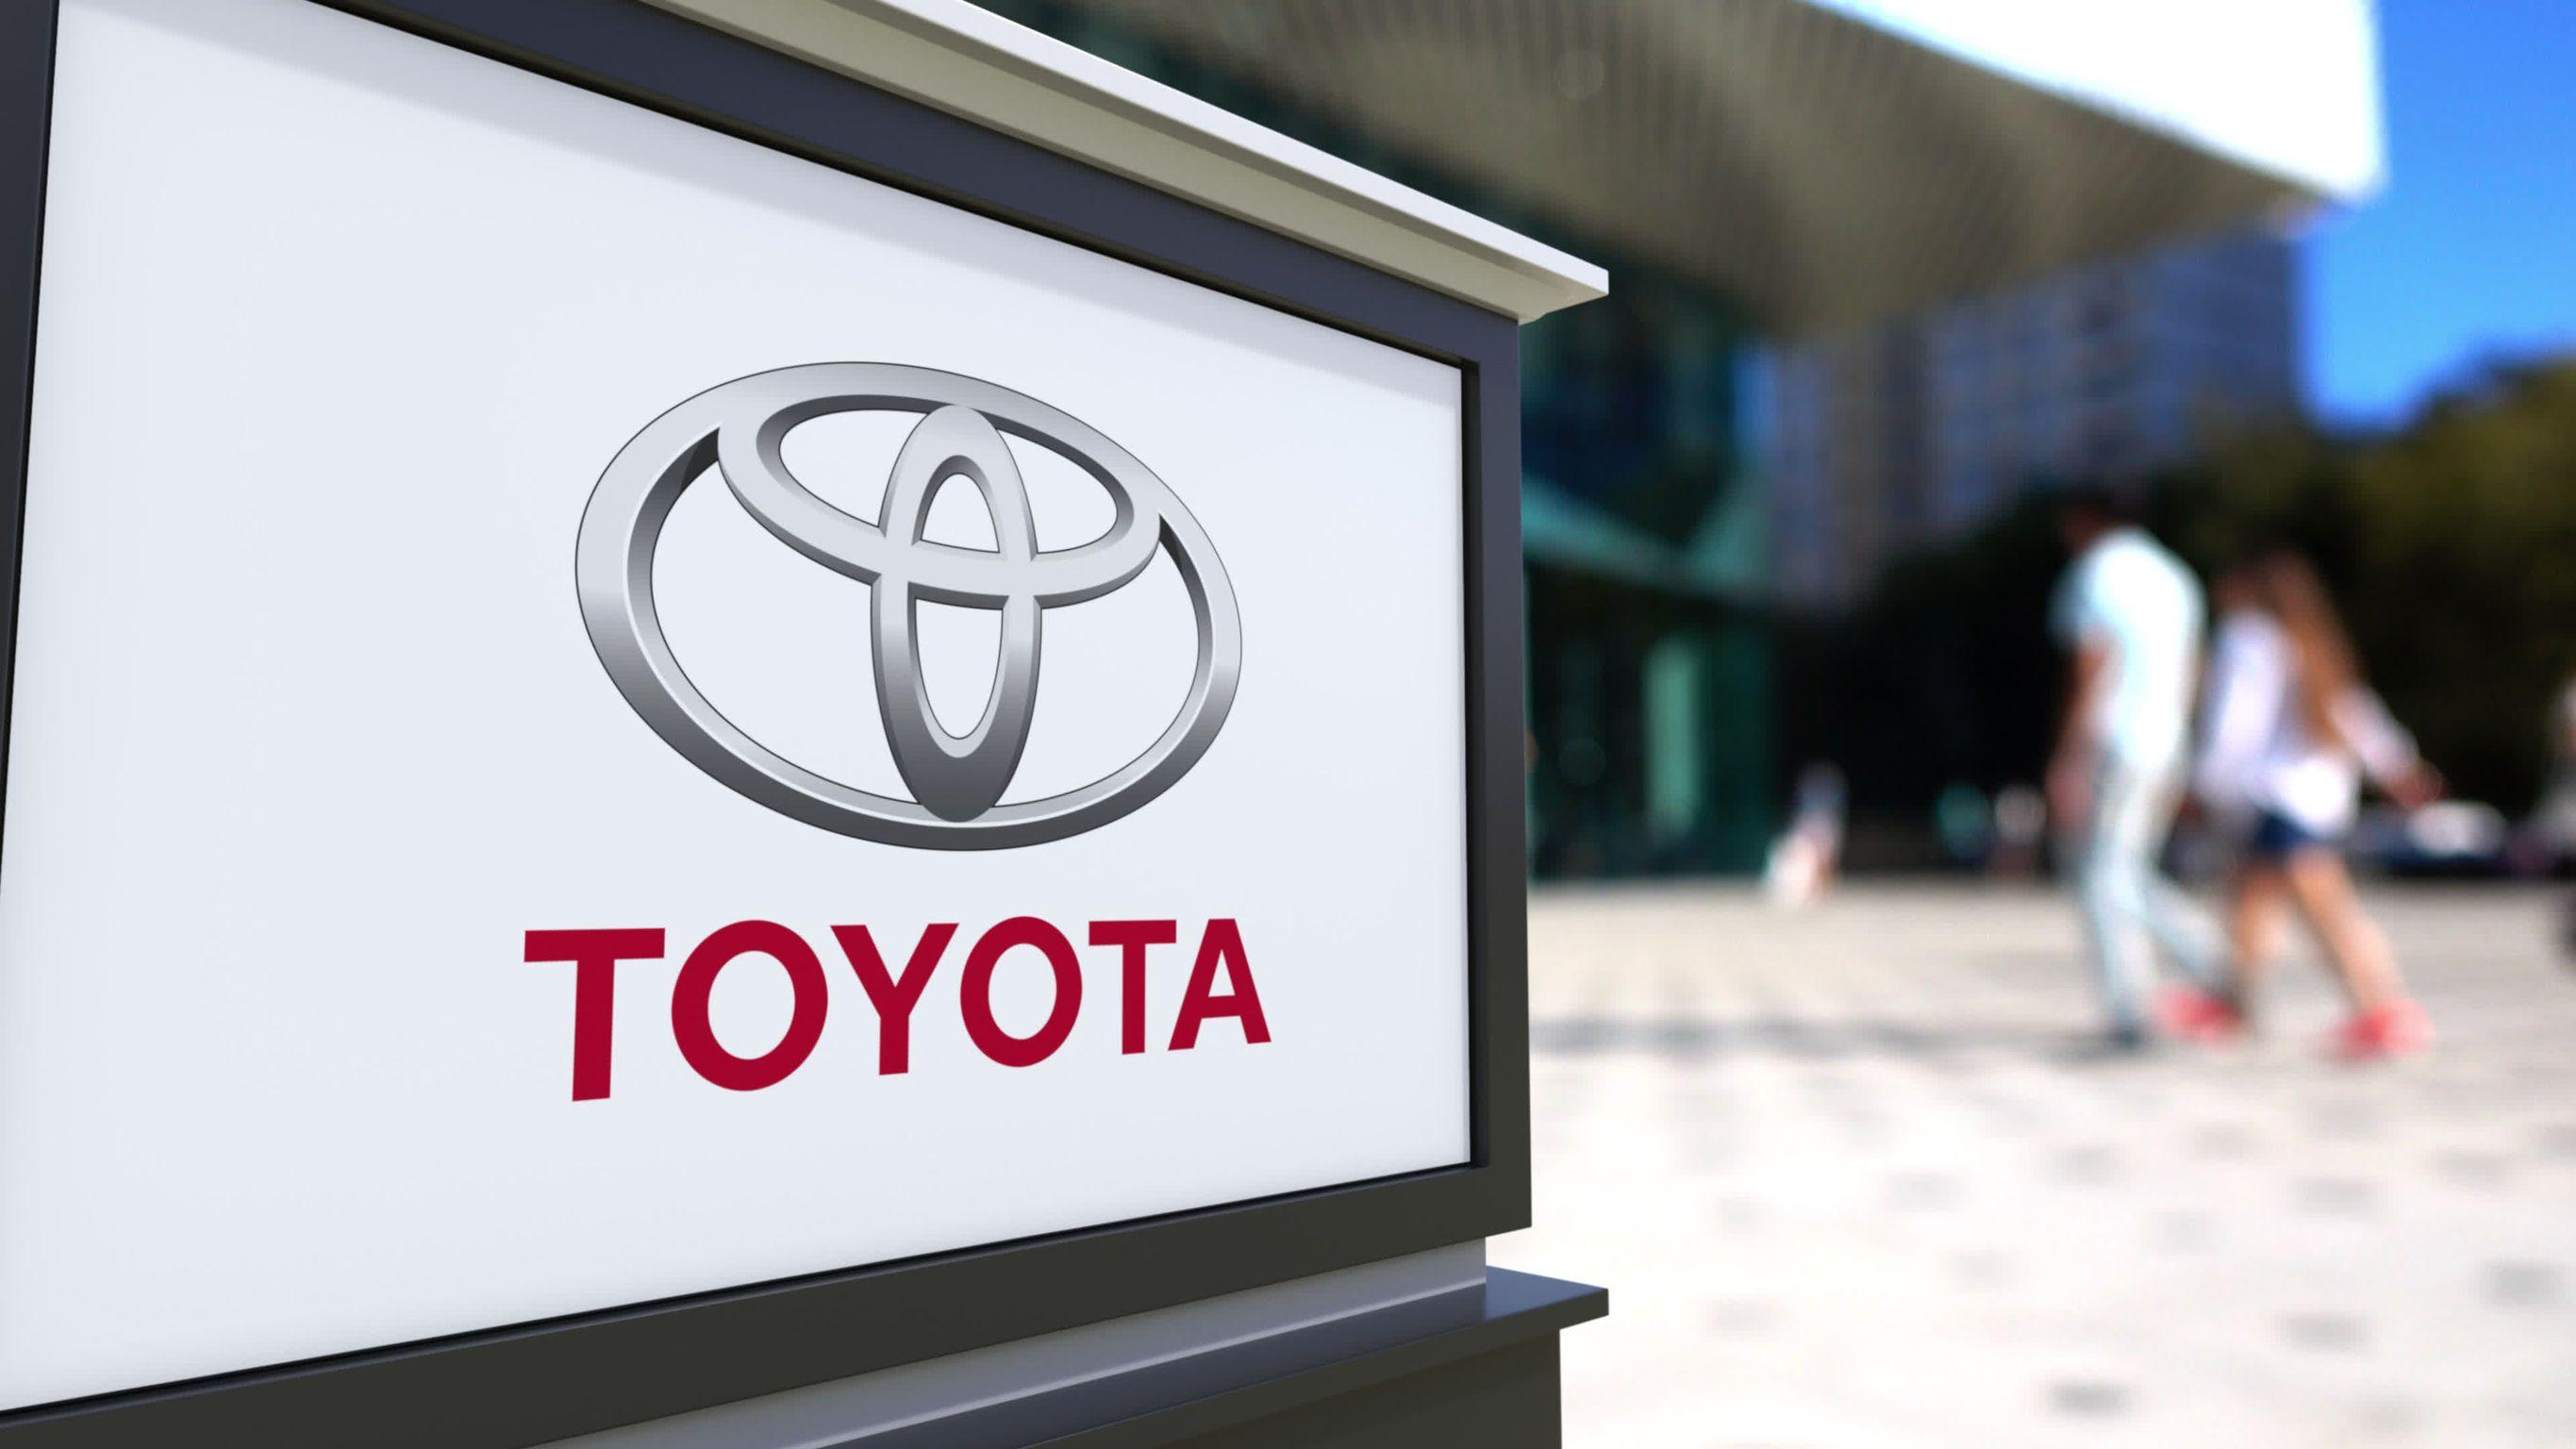 Toyota Kentucky Logo - Toyota announces $1.33 Billion investment in Kentucky plant | South ...